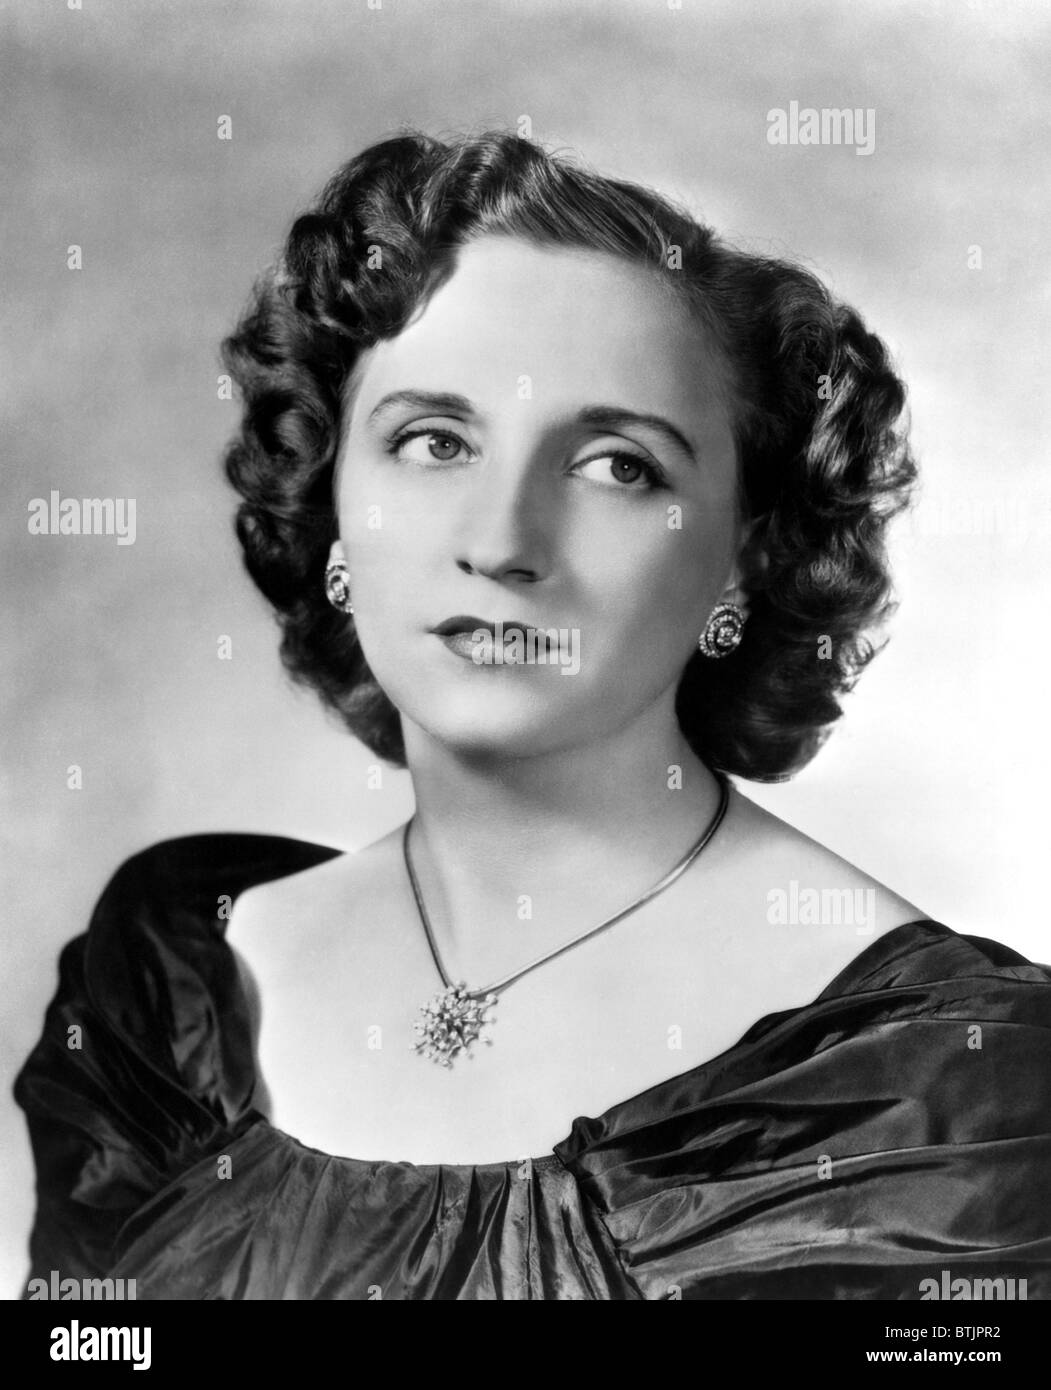 Margaret Truman, daughter of former U.S. President Harry Truman, 1950. Stock Photo